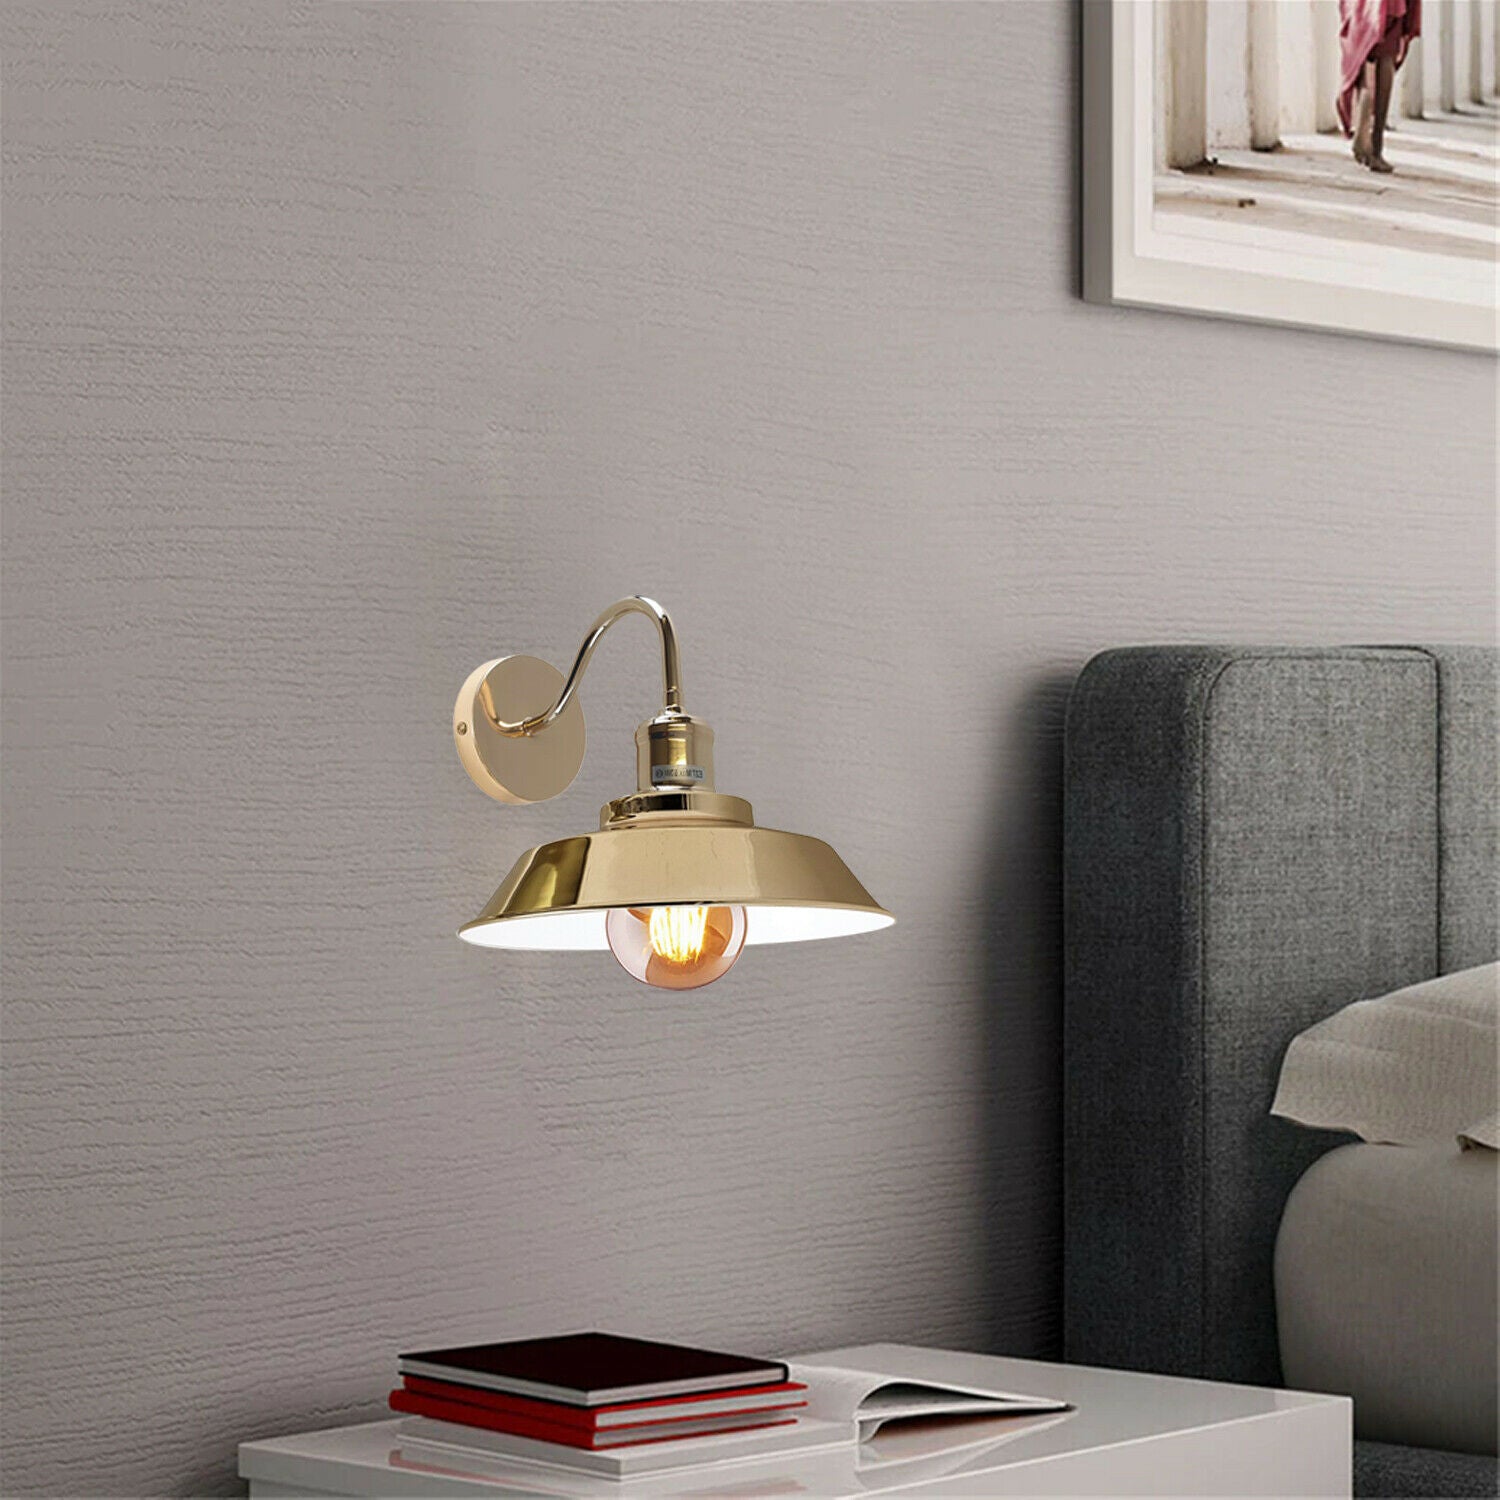 French Gold Retro Vintage Light Shade Ceiling Industrial Wall Lights Sconce Lamp~1743 - LEDSone UK Ltd